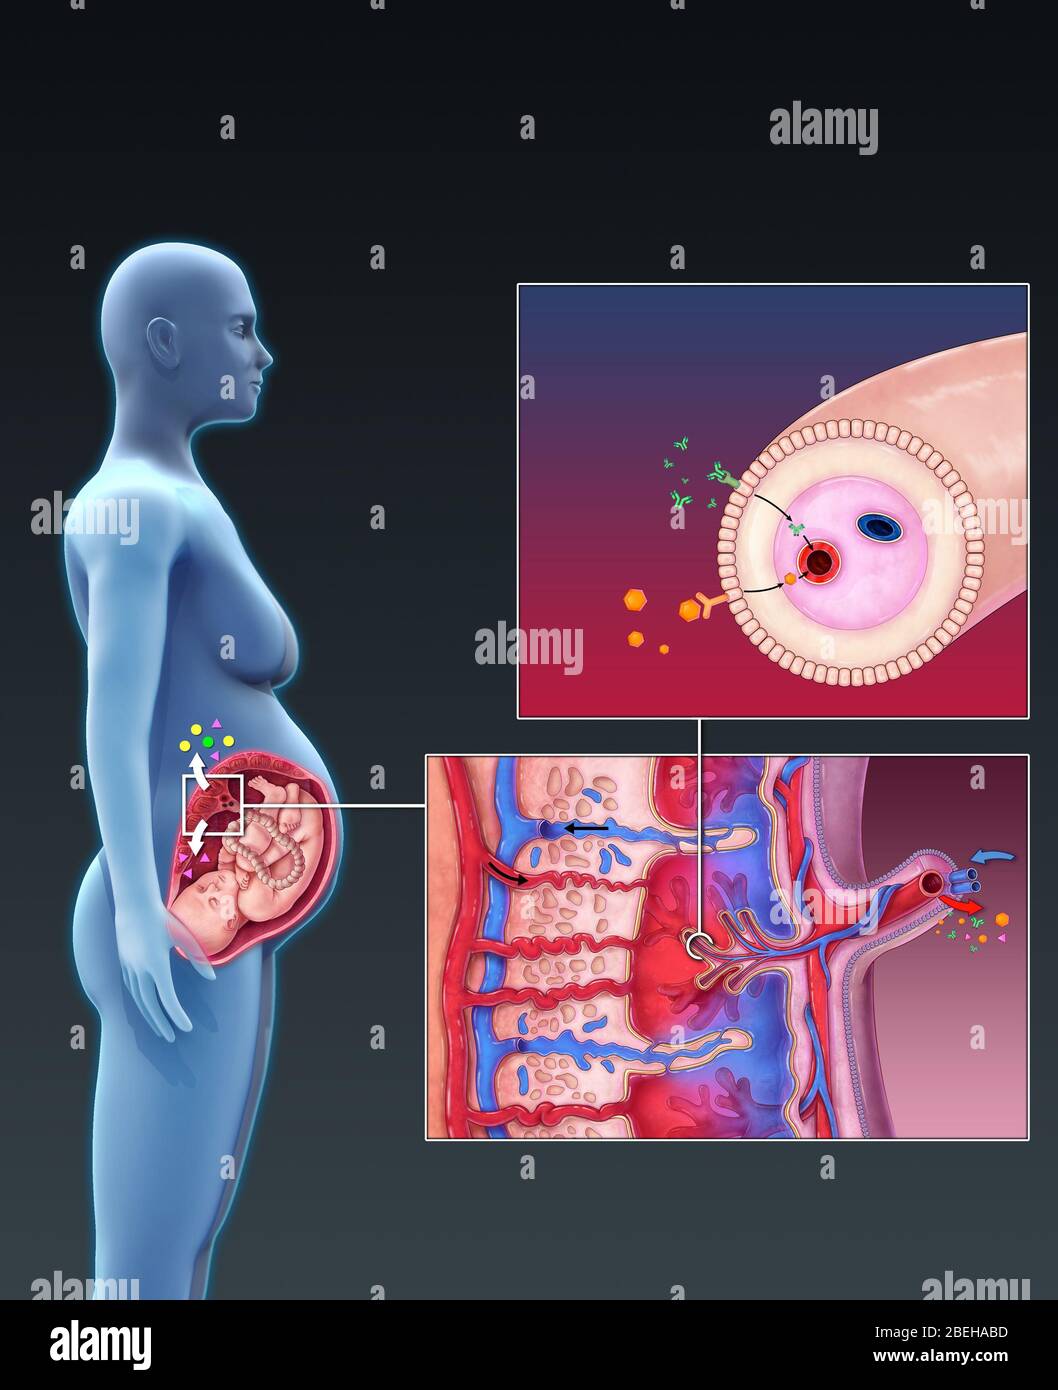 human placenta diagram